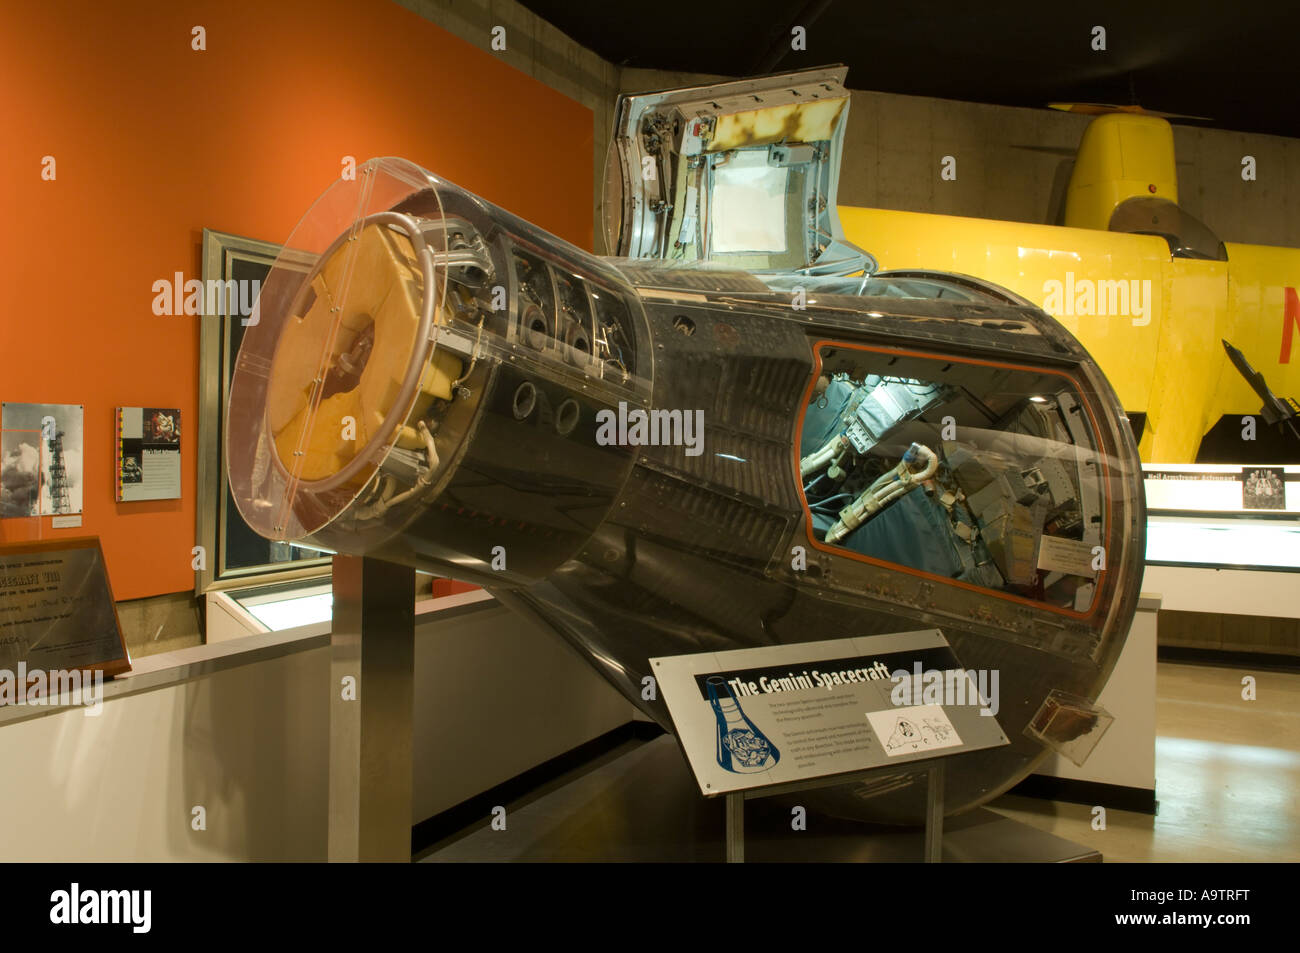 Géminis 8 cápsula espacial en la exhibición en el Neil Armstrong Air and Space Museum en Wapakoneta Ohio EE.UU Foto de stock